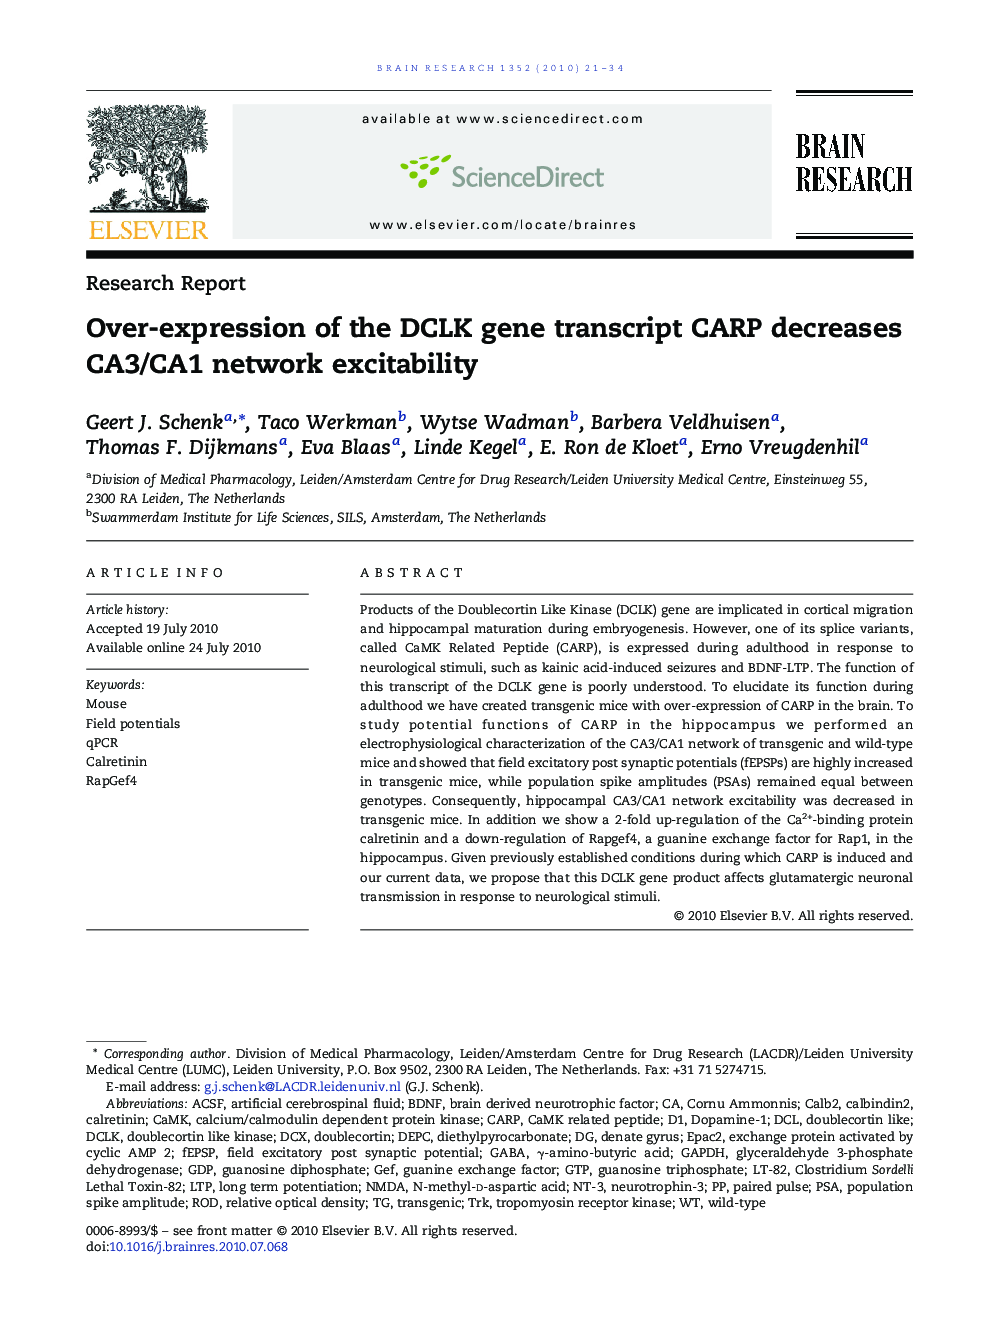 Over-expression of the DCLK gene transcript CARP decreases CA3/CA1 network excitability